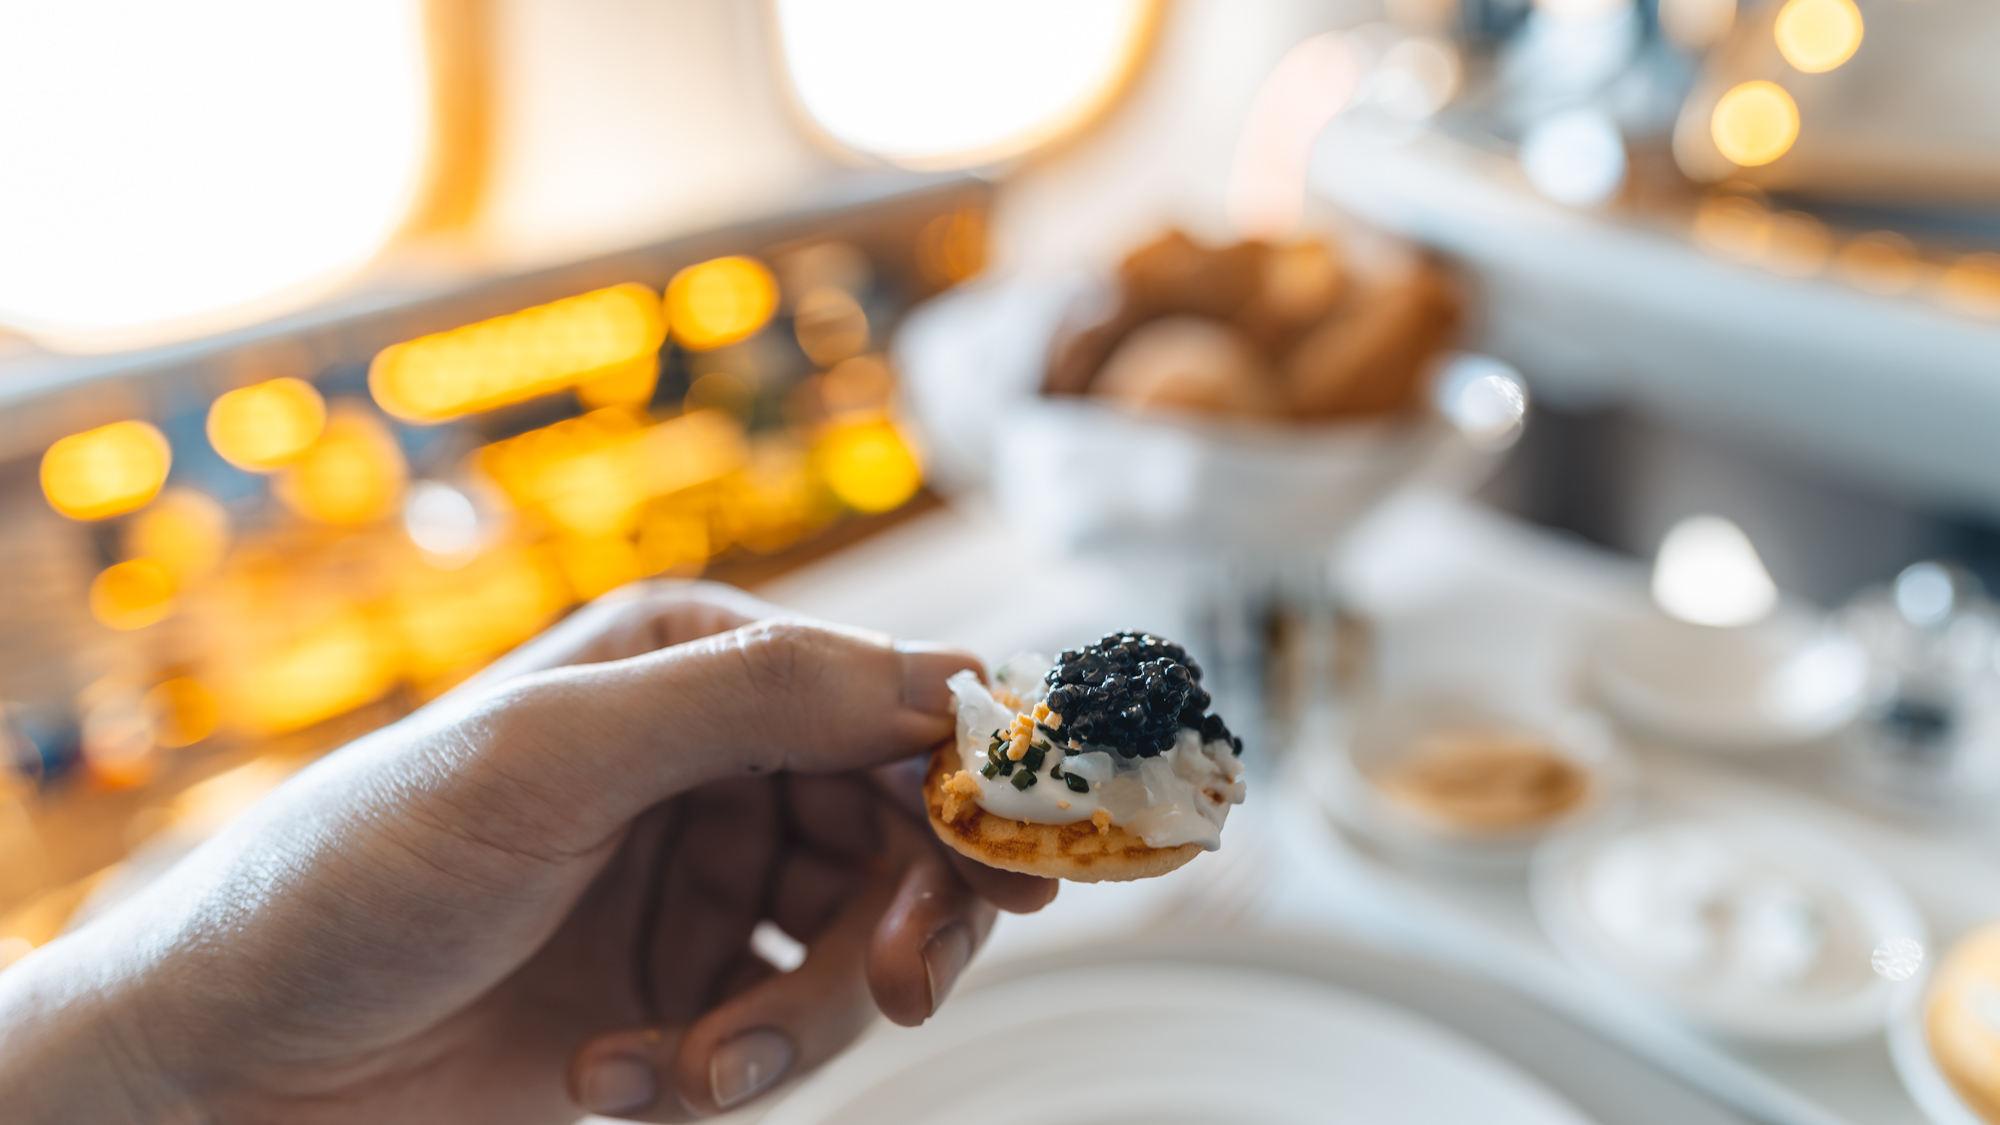 Emirates Boeing 777 First Class caviar bite